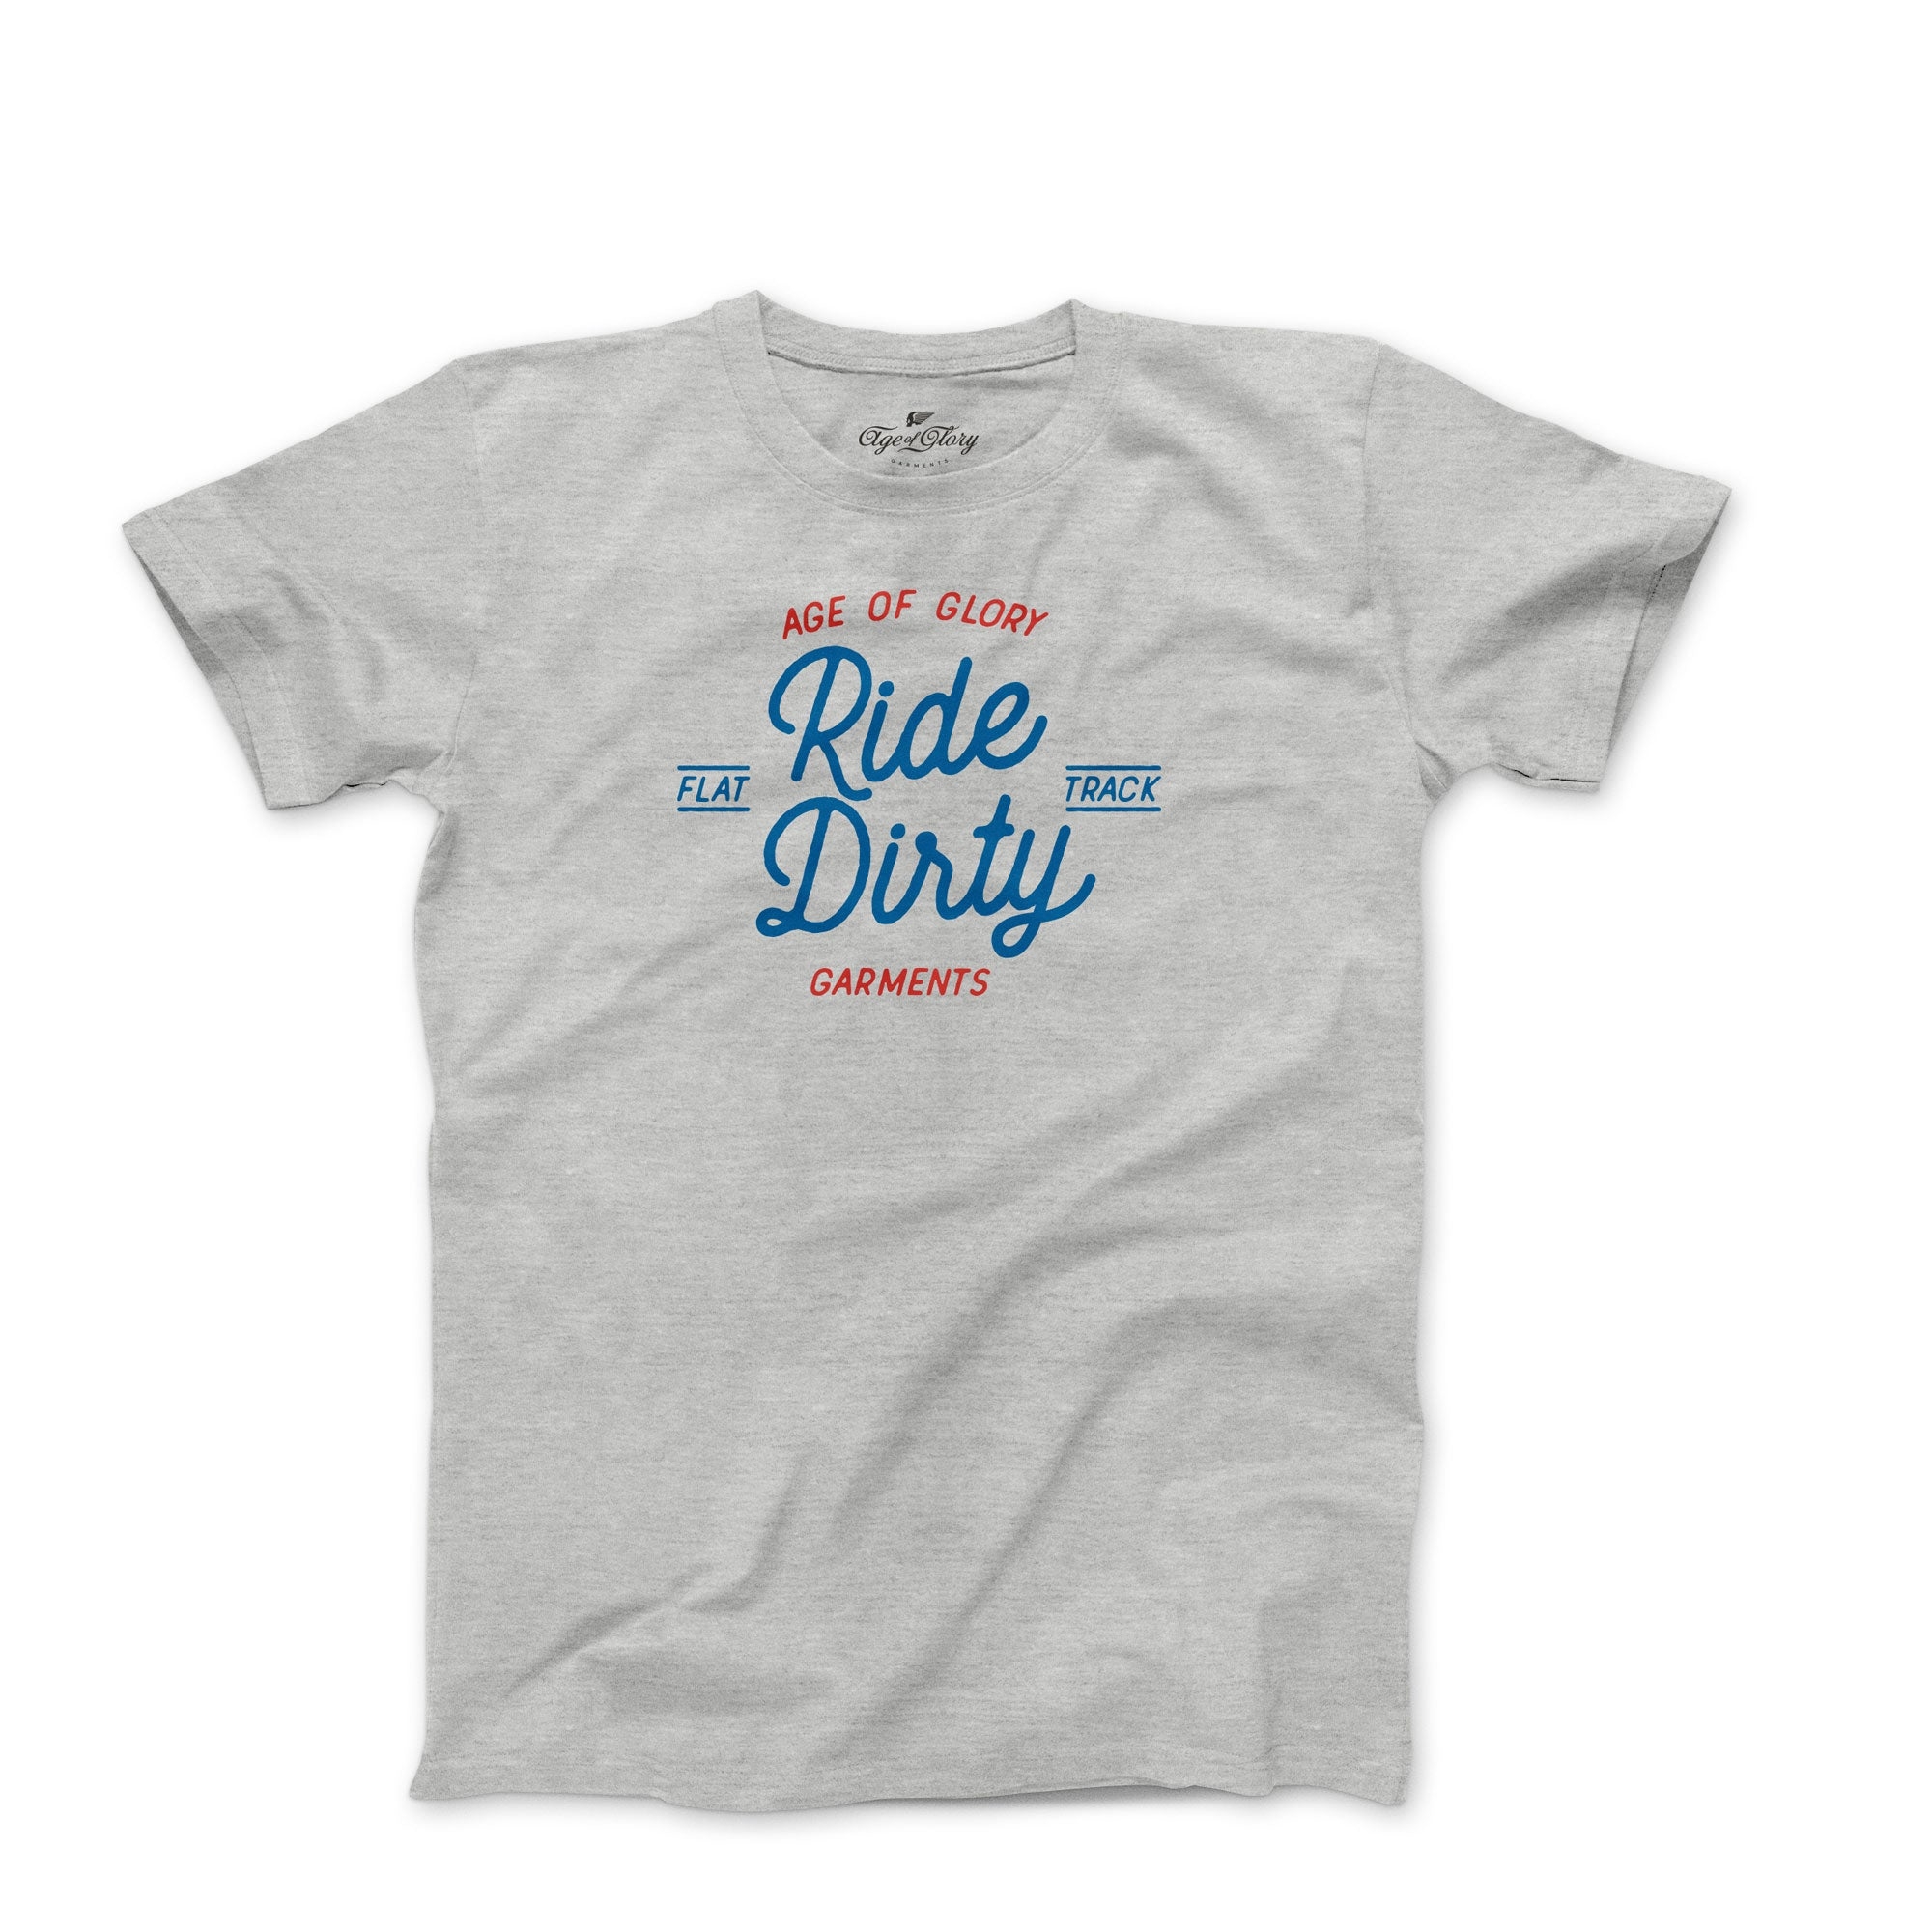 Age of Glory Ride Dirty Tee-shirt Heather Grey XL – Armadillo Customs